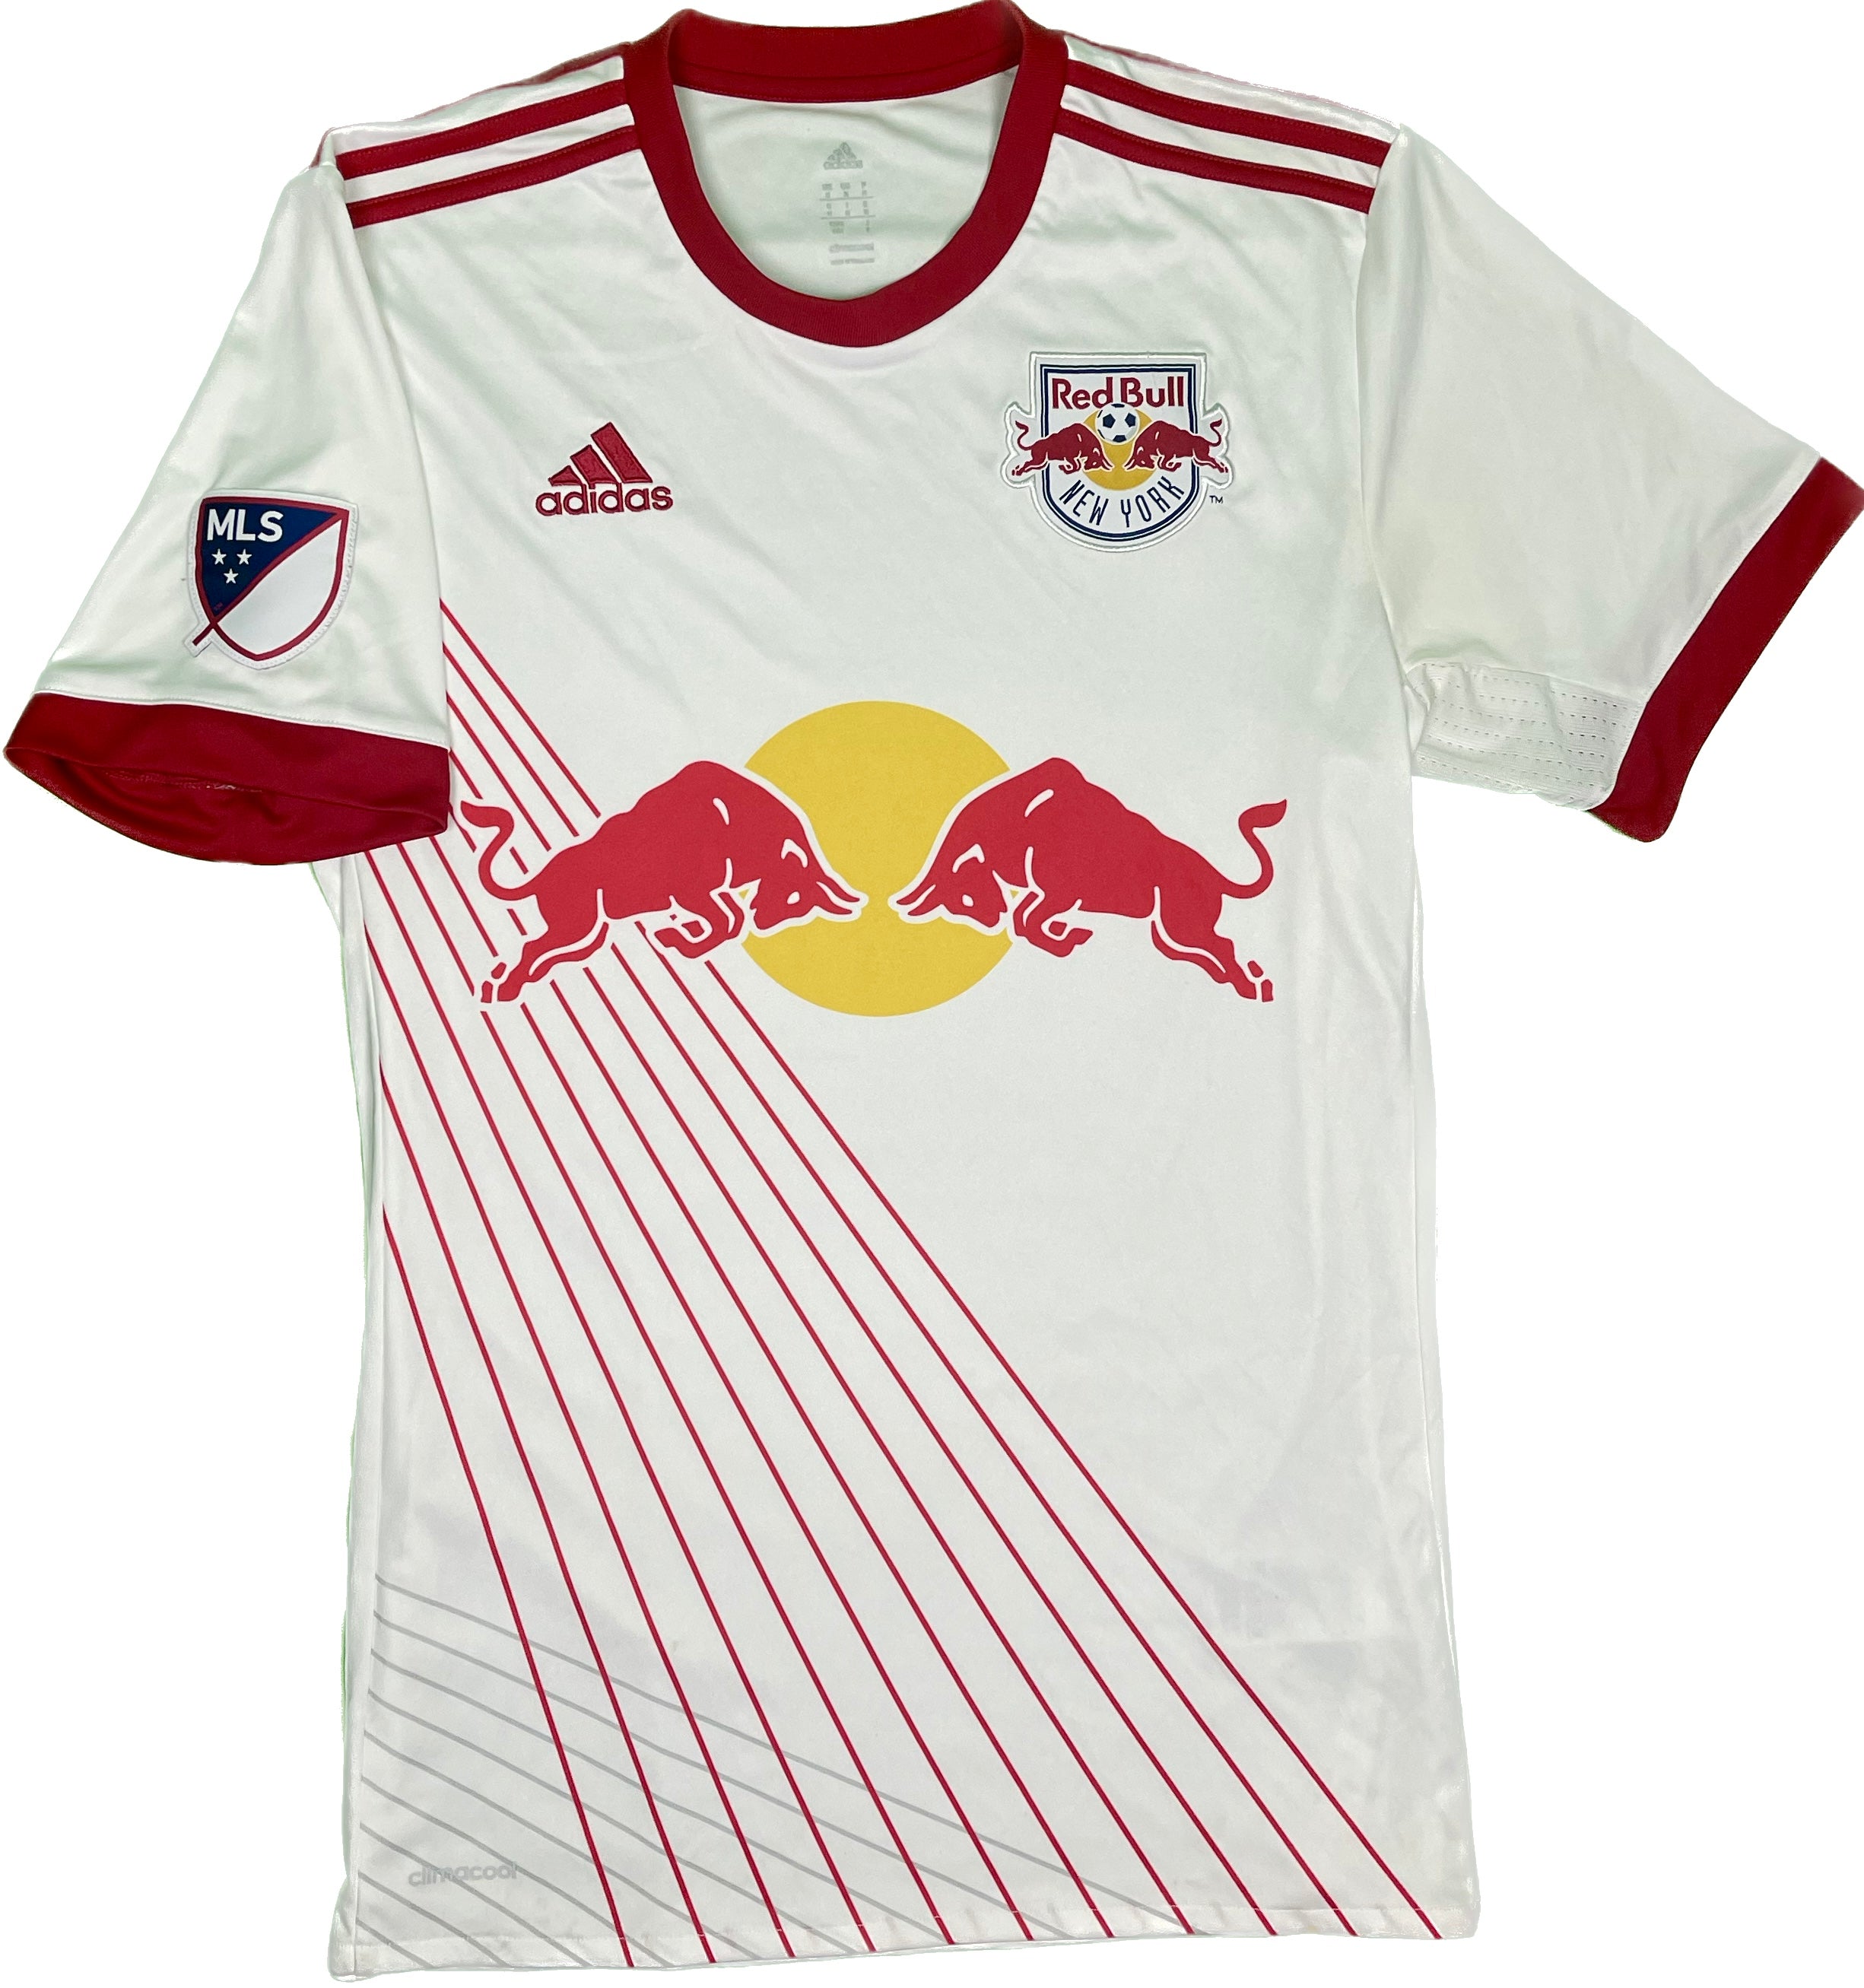 MLS Red Bull New York Soccer Jersey